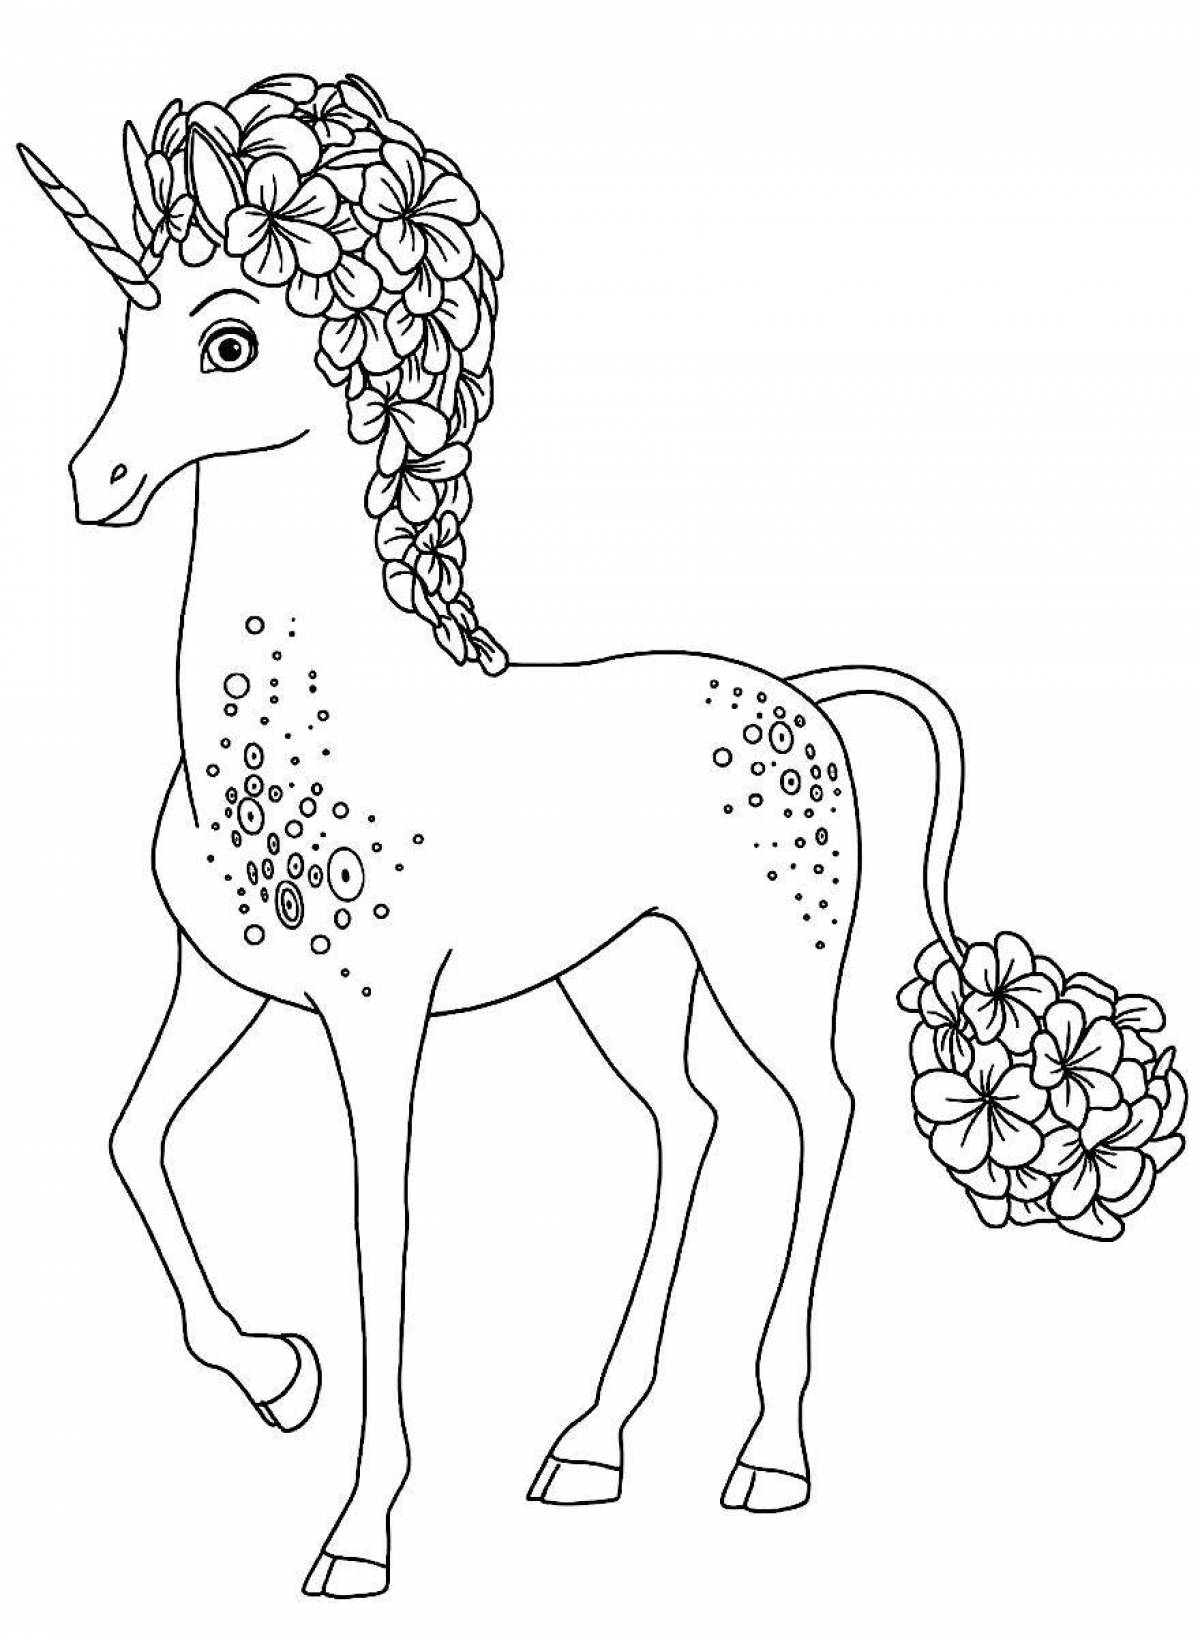 Serene coloring page mia and me unicorns